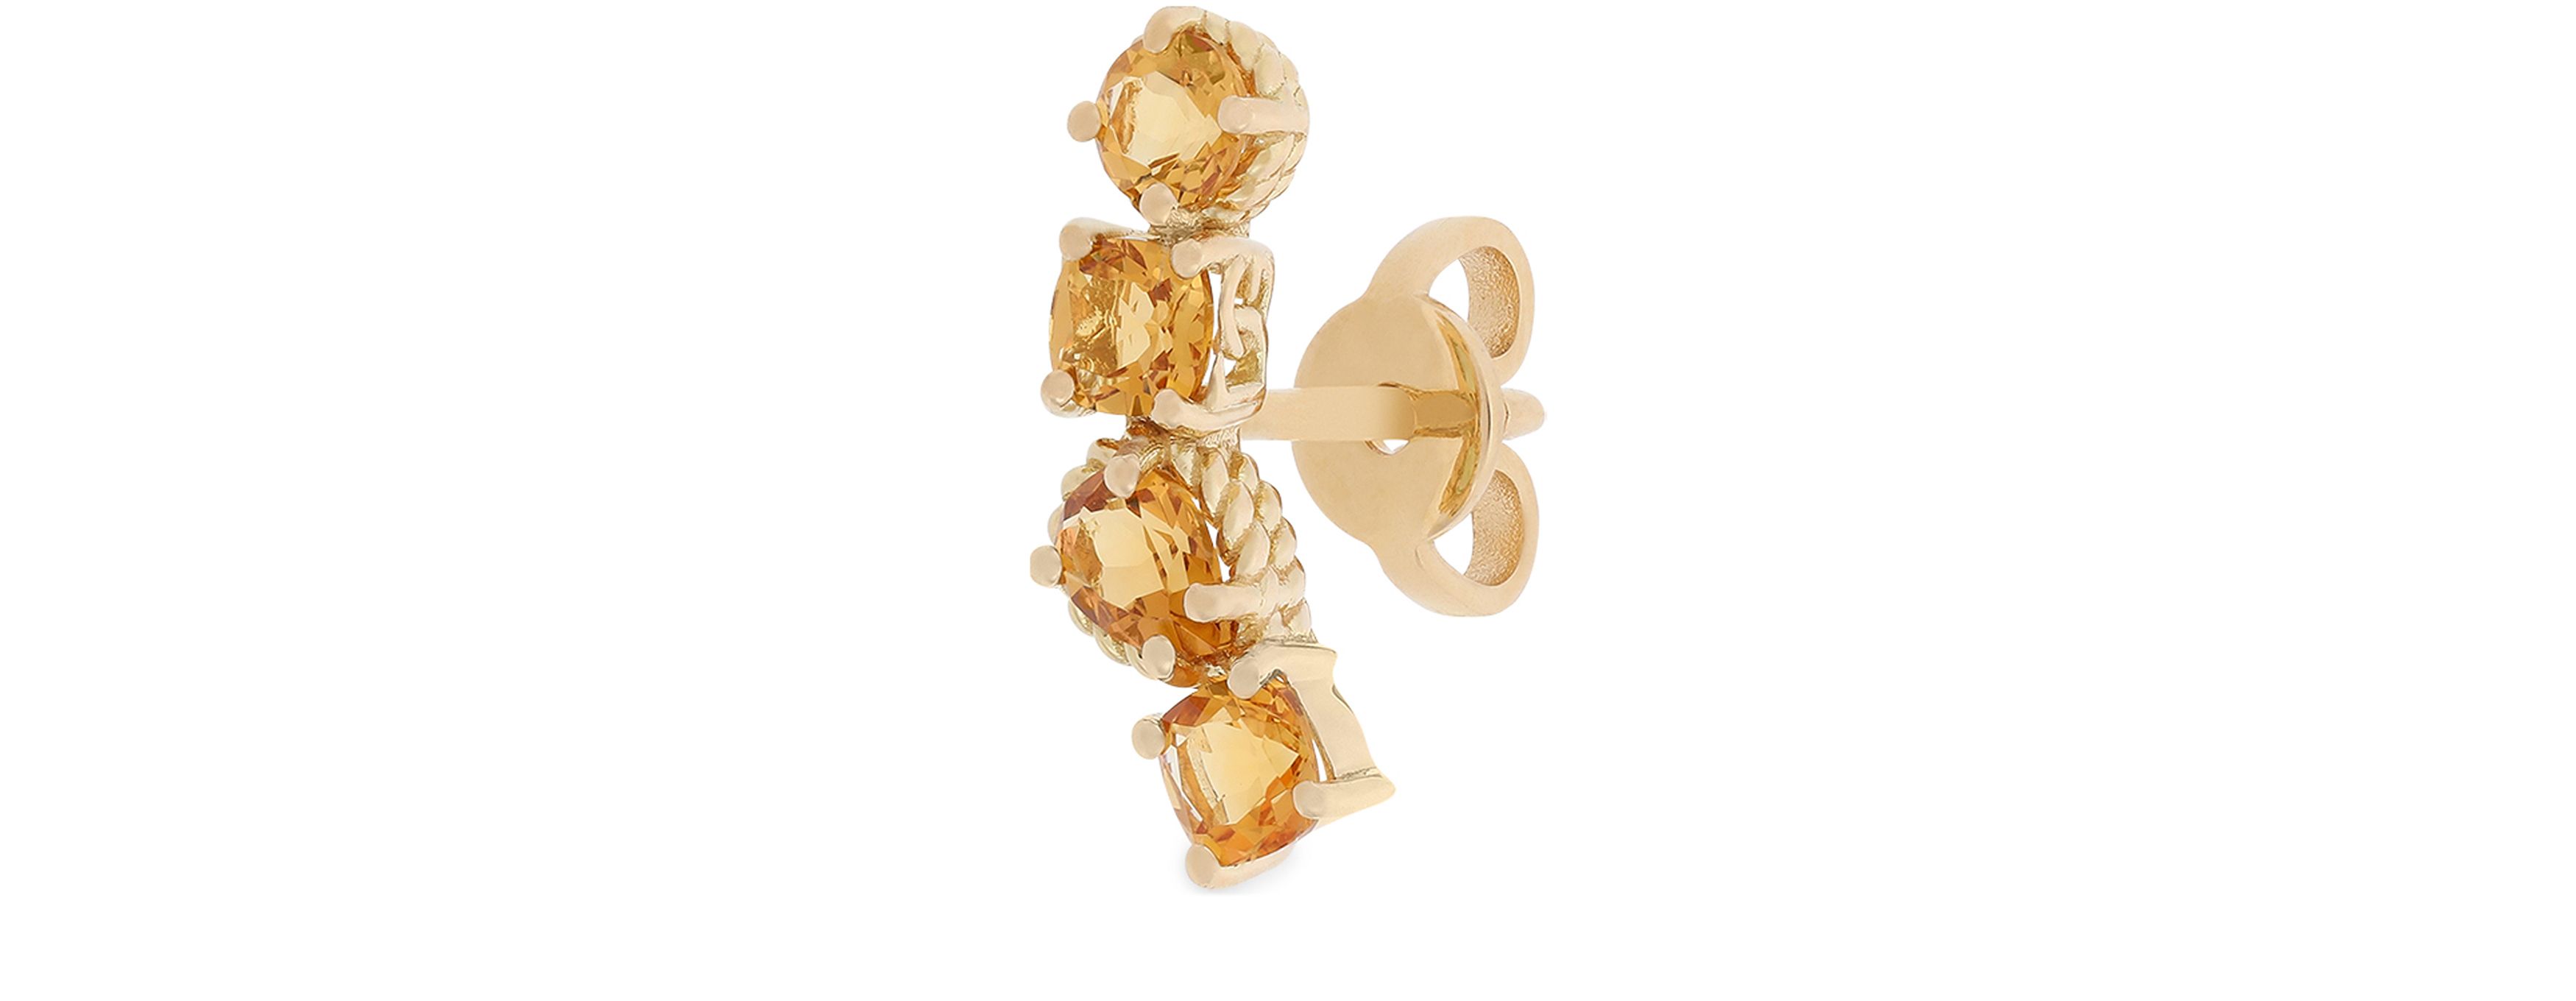 Dolce & Gabbana Single earring in yellow gold 18kt